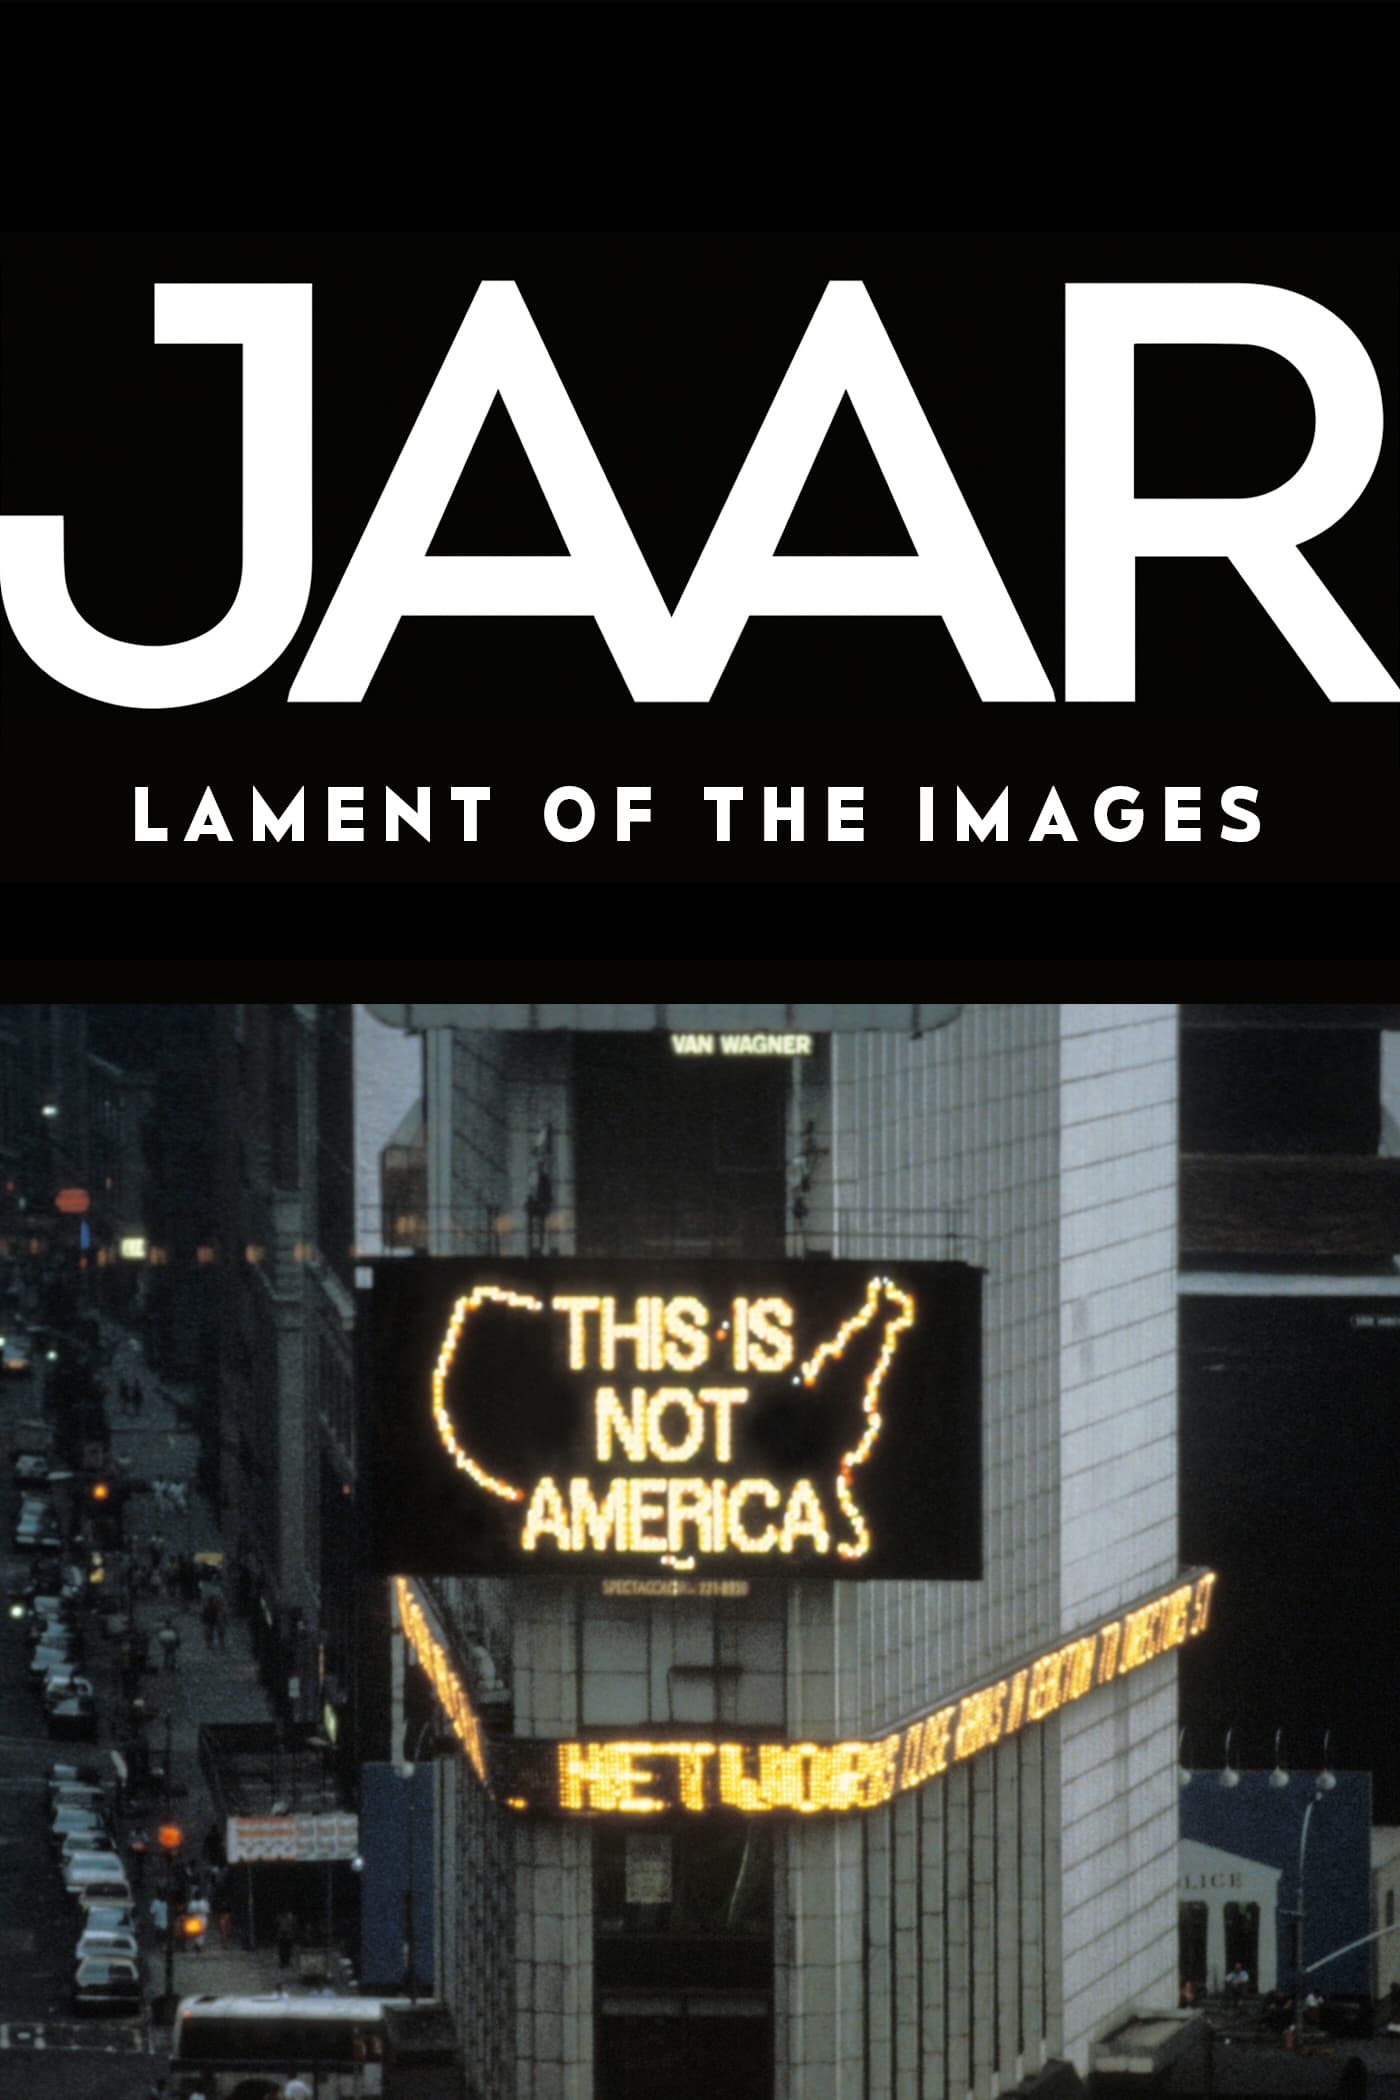 JAAR, Lament of the Images